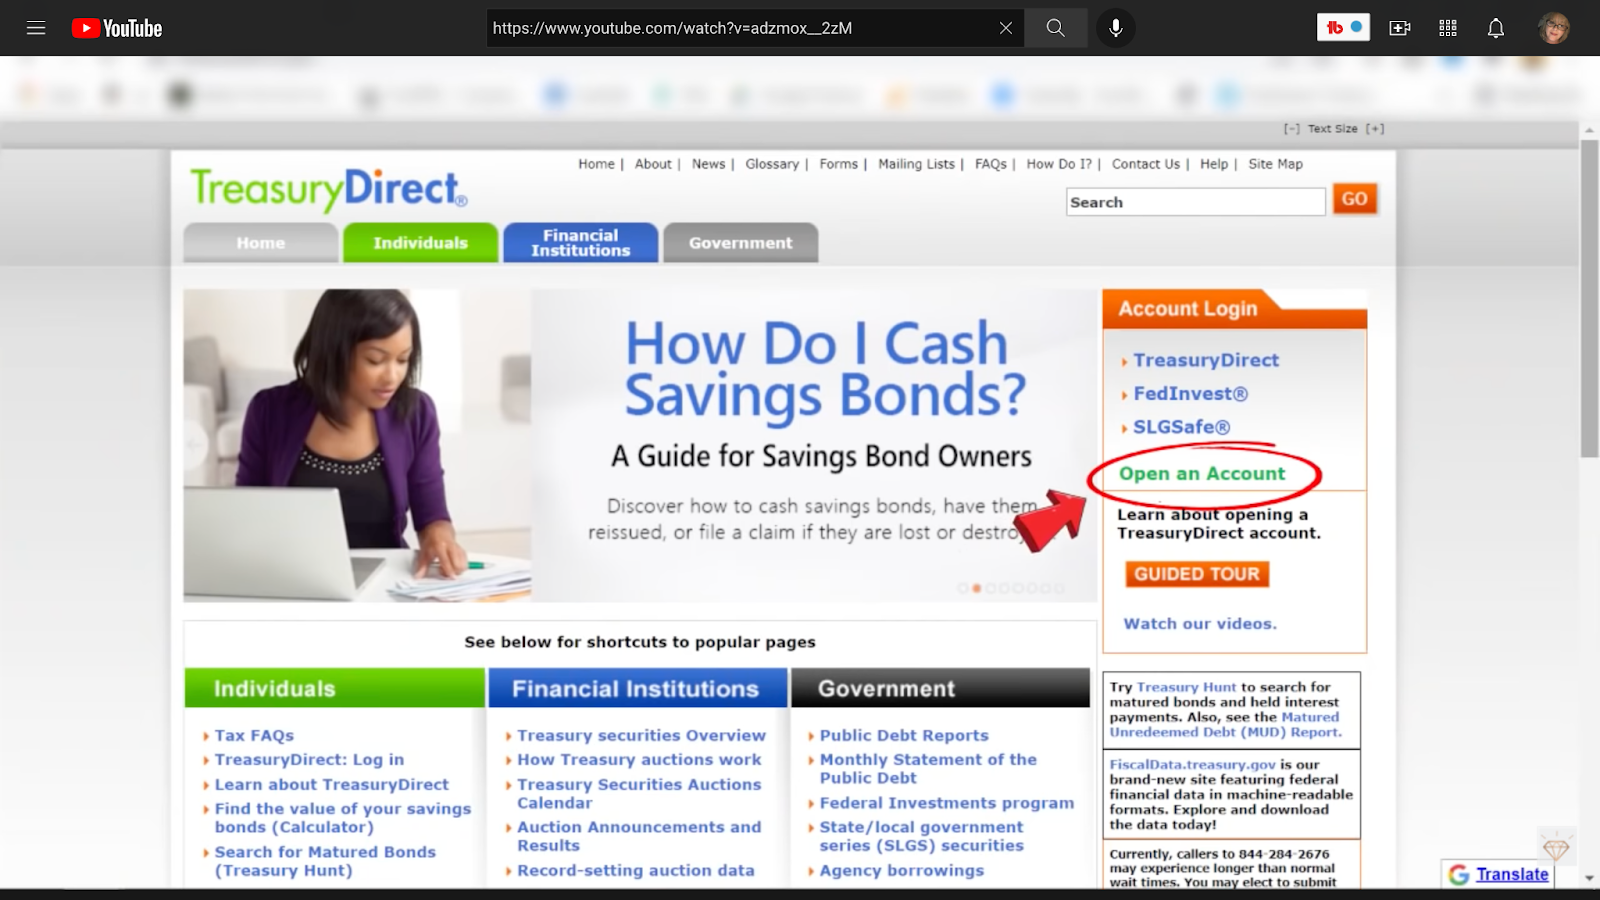 TreasuryDirect.gov website portal to buy i bonds